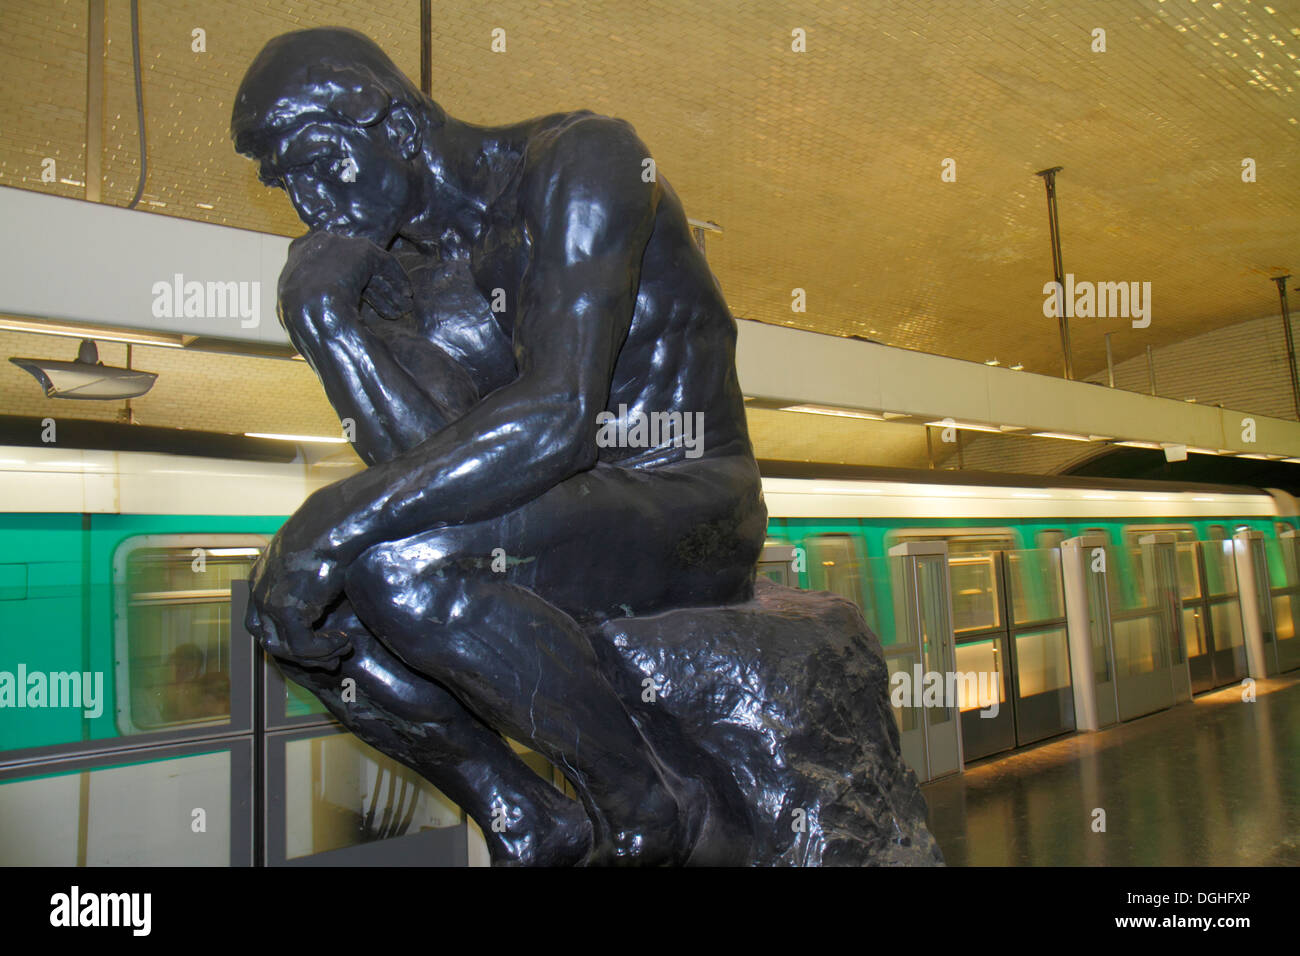 Paris France,7th arrondissement,Varenne Metro Station Line 13,subway,train,platform,Rodin,The Thinker,train,art,sculpture,France130818045 Stock Photo